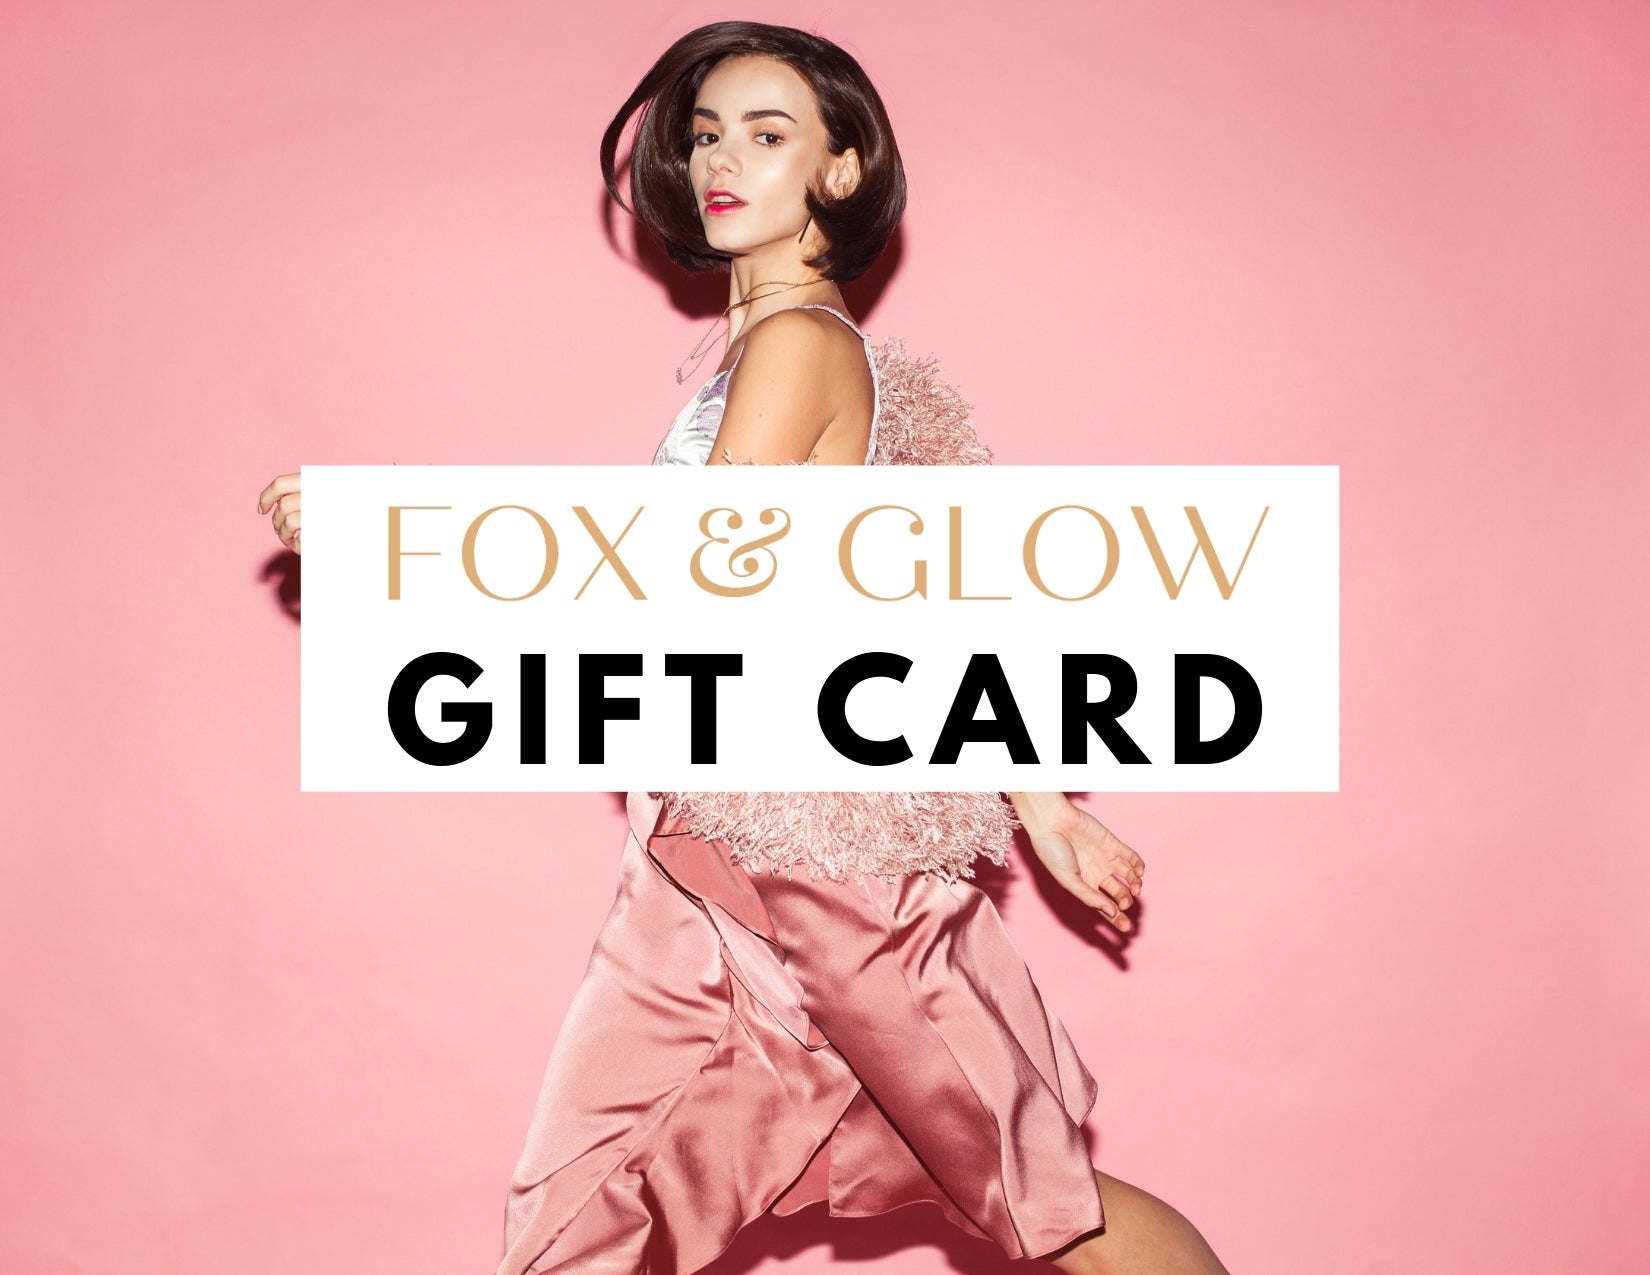 The FOX & GLOW Gift Card